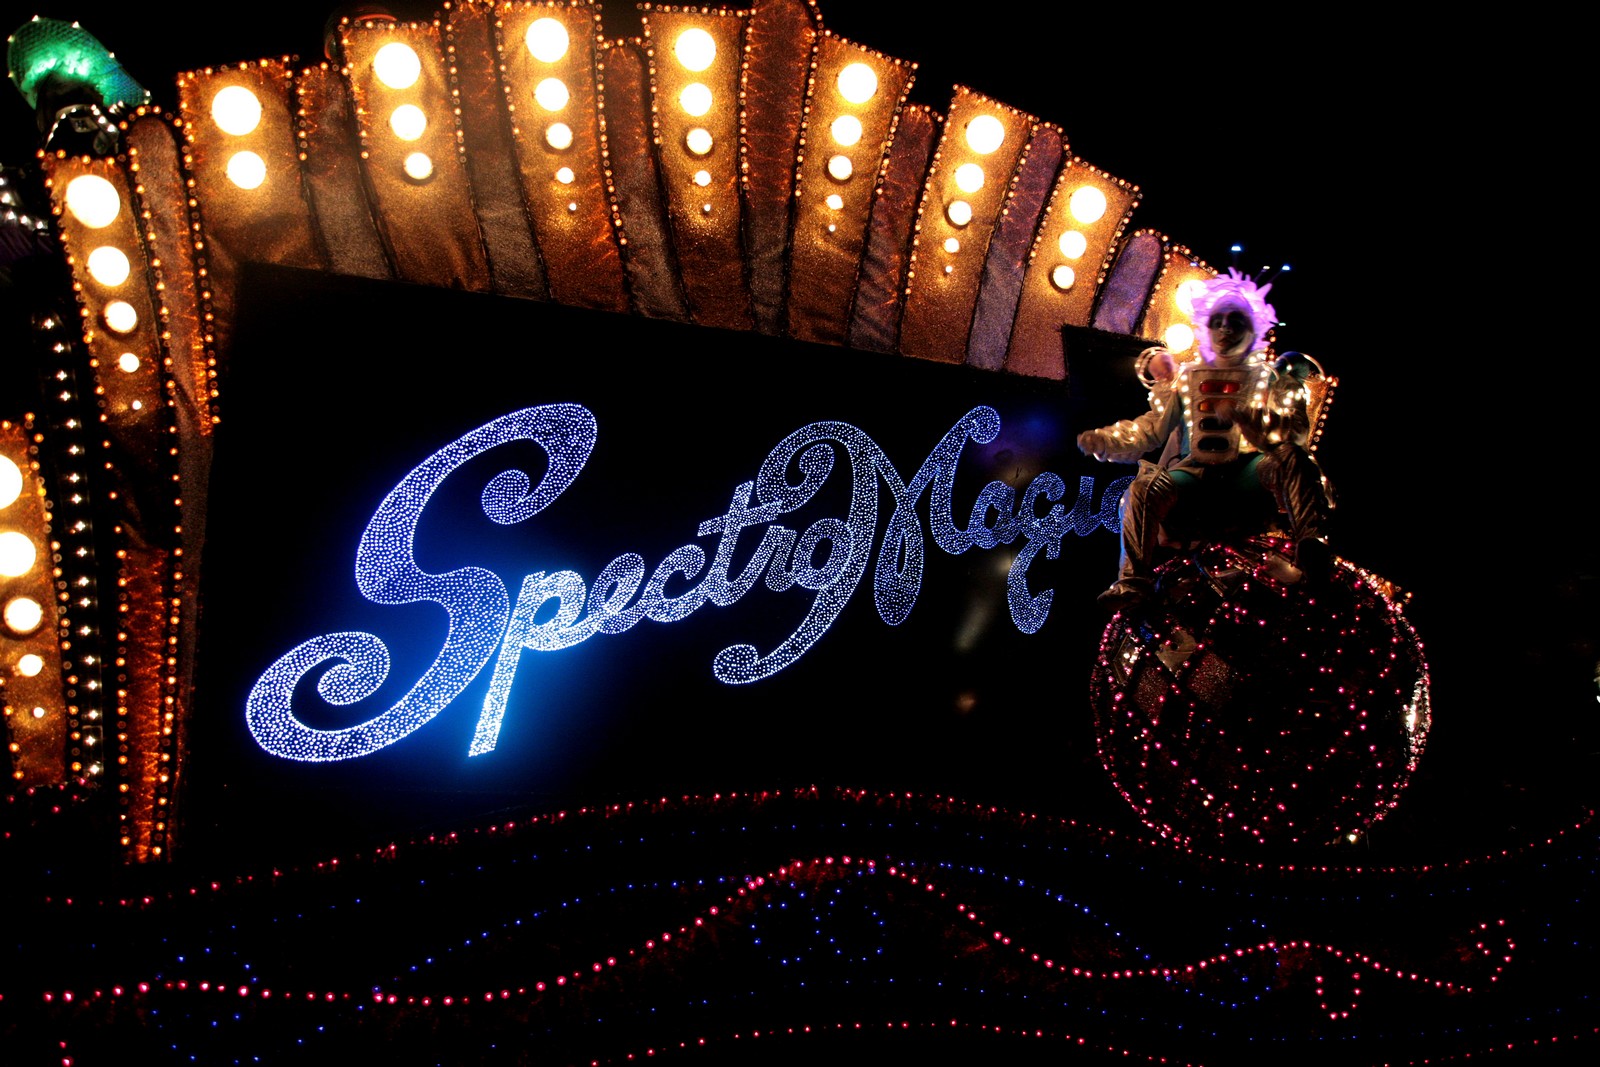 Disney SpectroMagic